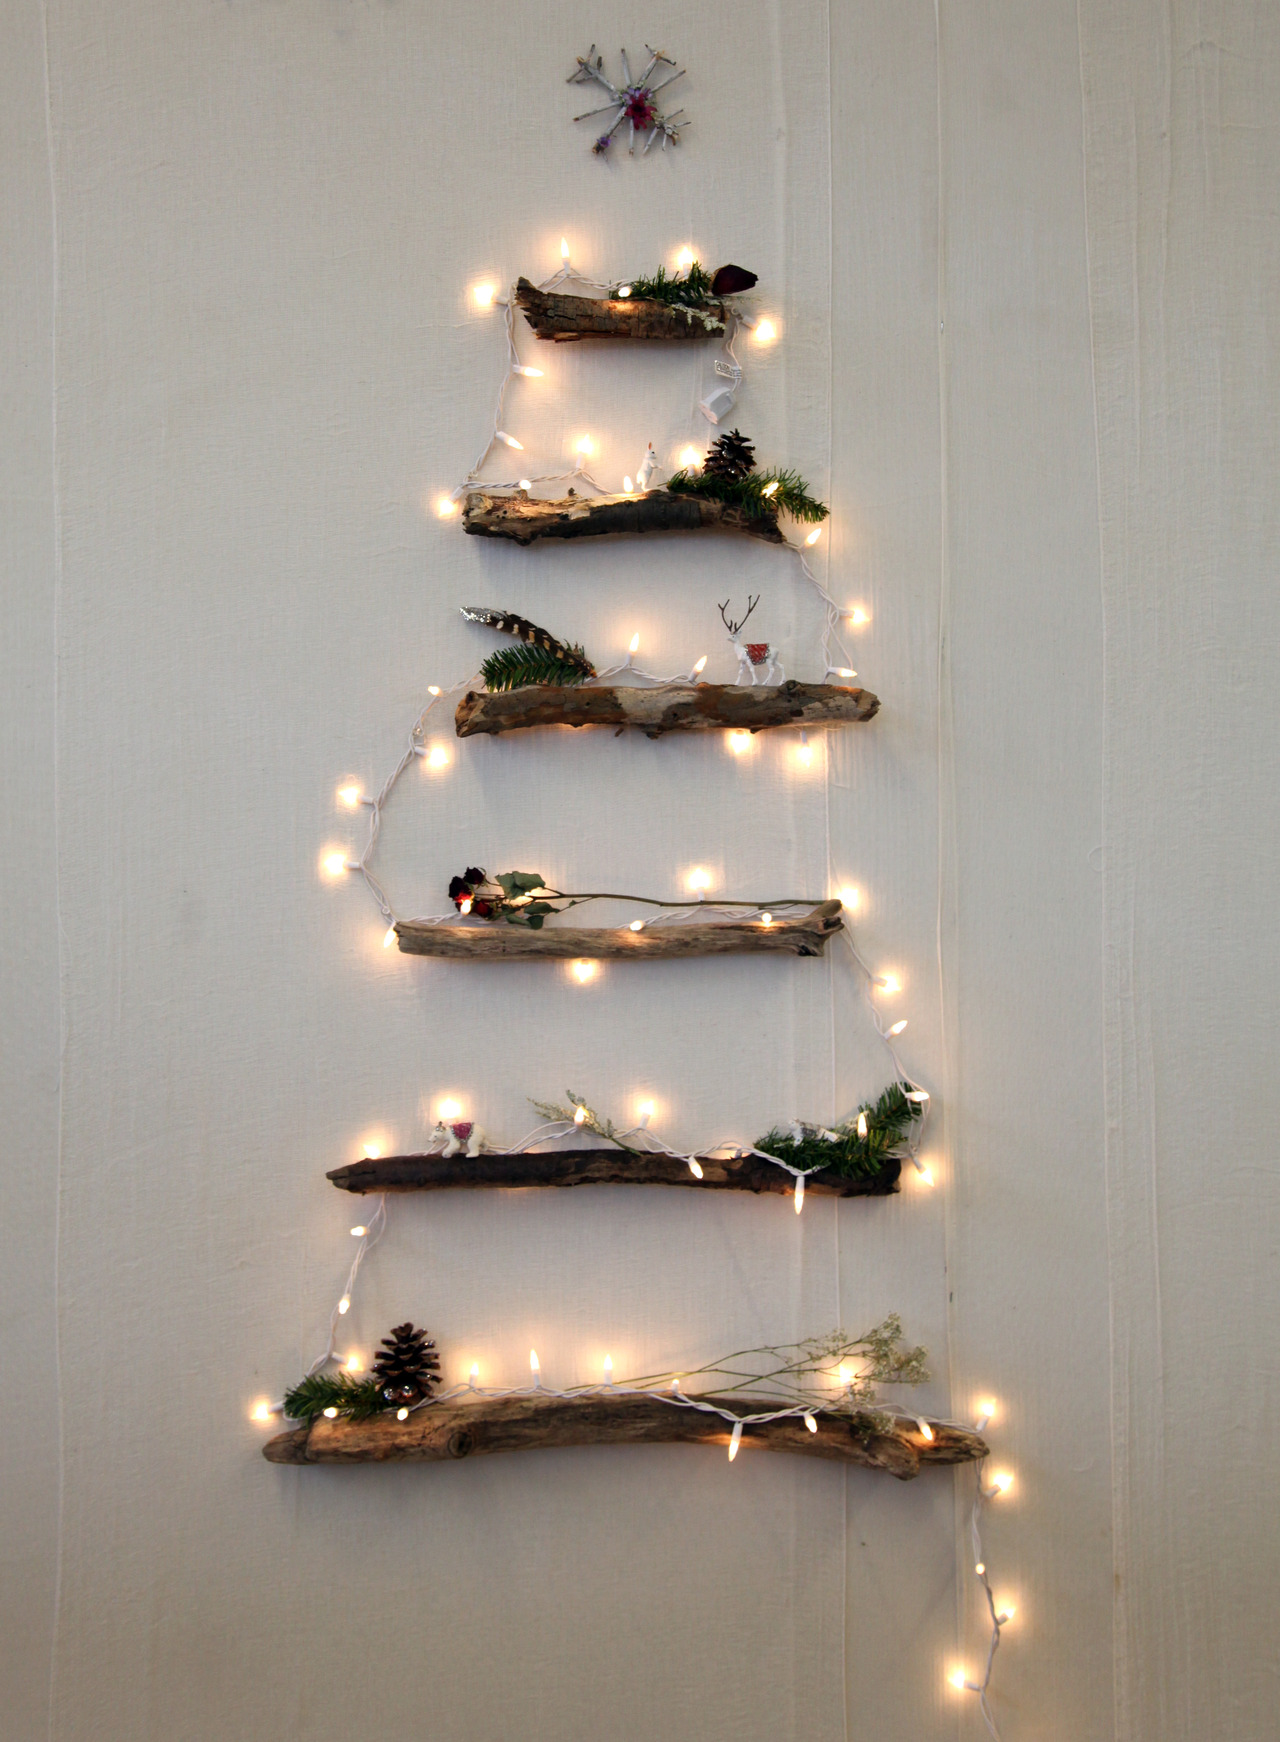 Wall Christmas Trees with Lights